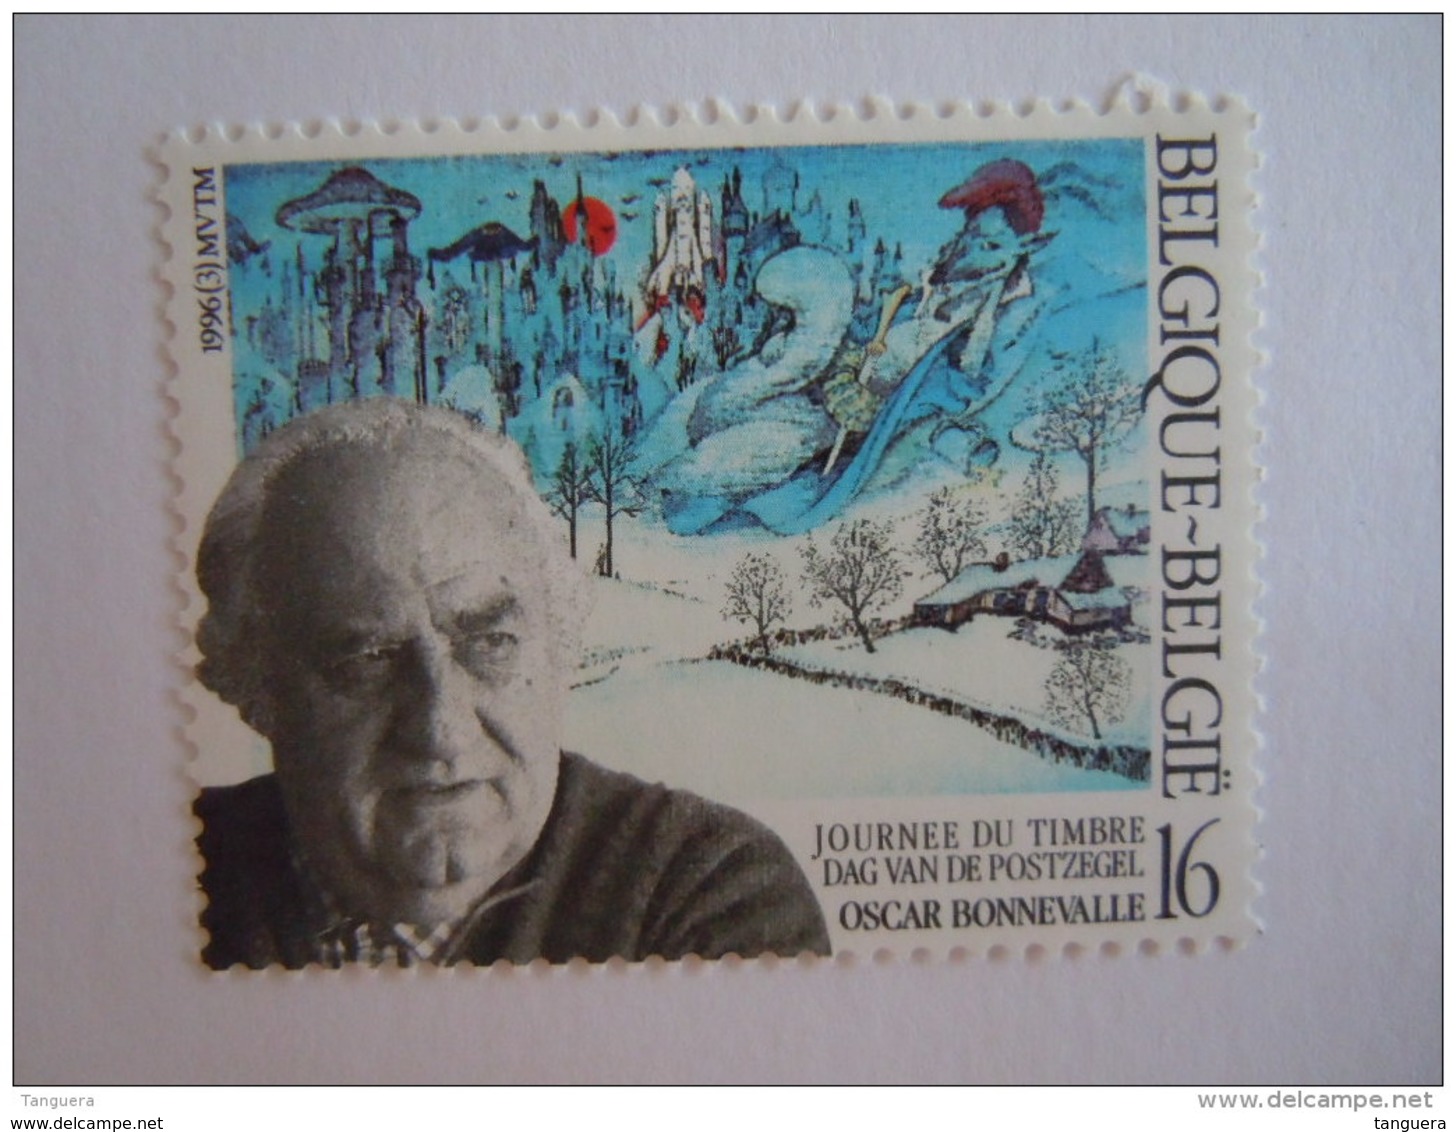 België Belgique 1996 Oscar Bonnevalle Dag Van De Postzegel Journée Du Timbre Cob 2629 MNH ** - Ongebruikt